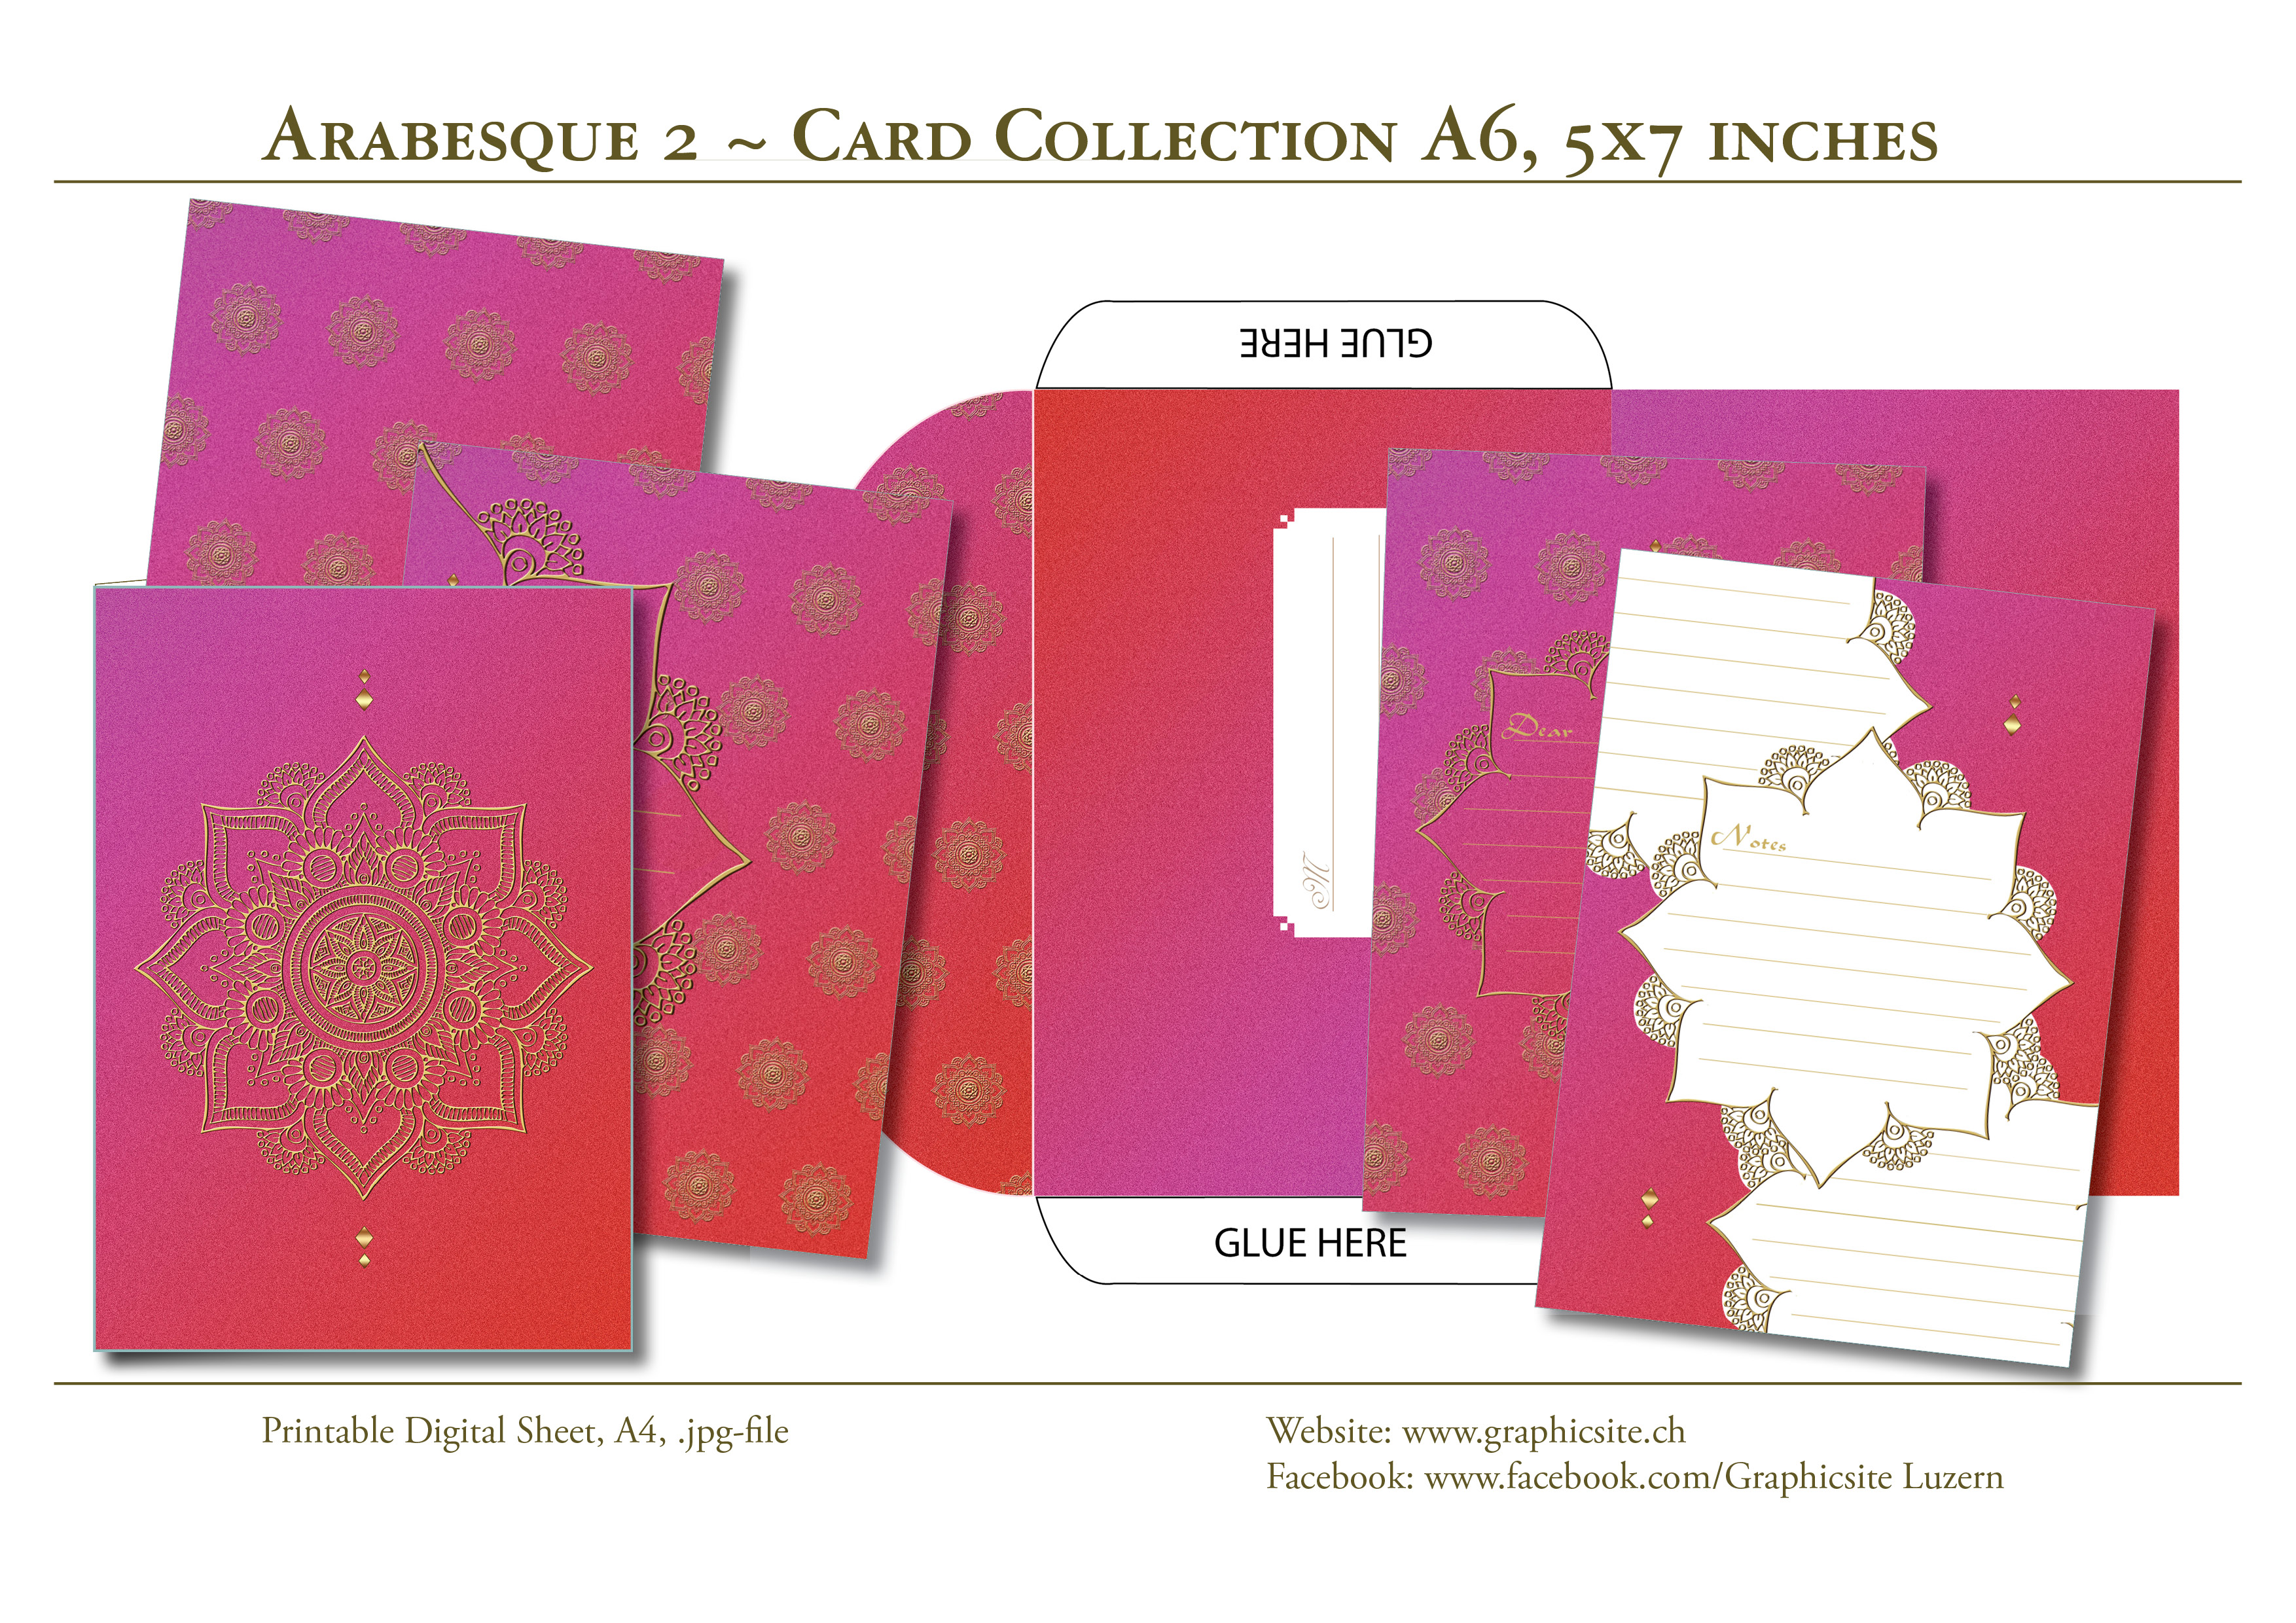 Printable Digital Sheet - Cards, Downloads, Greeting Cards, Notecards, Envelope, Graphic Design, Luzern